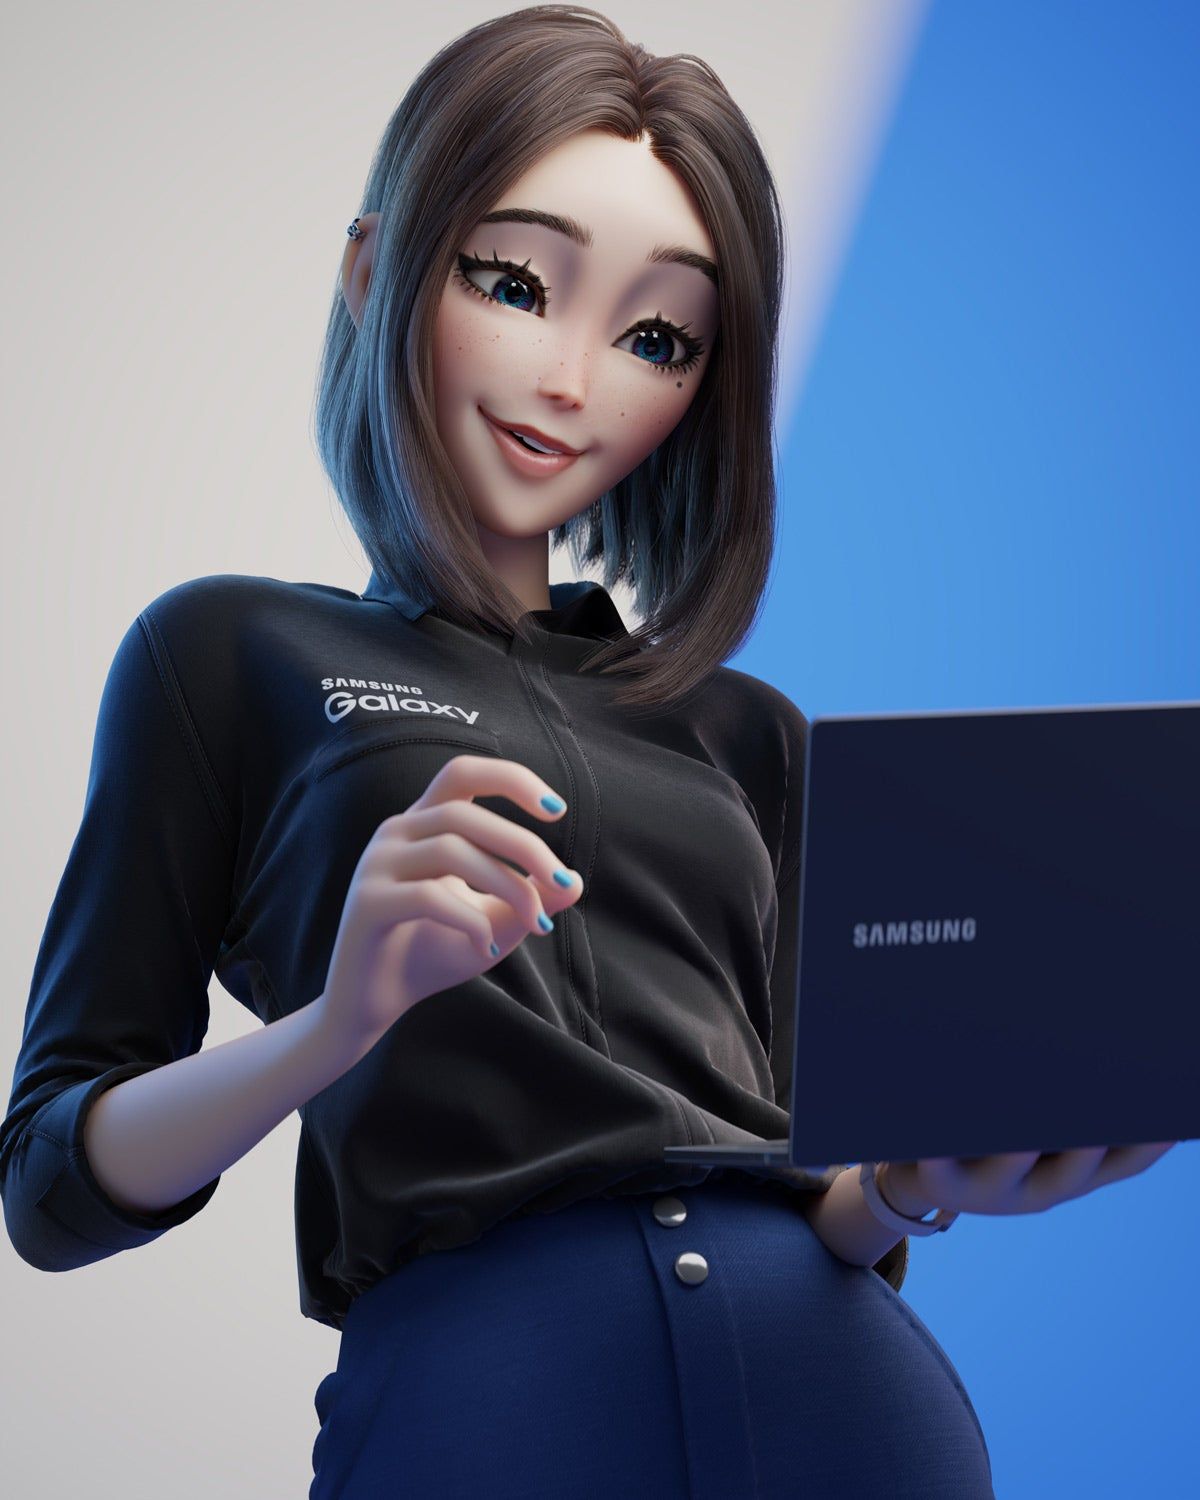 HD wallpaper: Sam (Samsung virtual assistant), fictional character